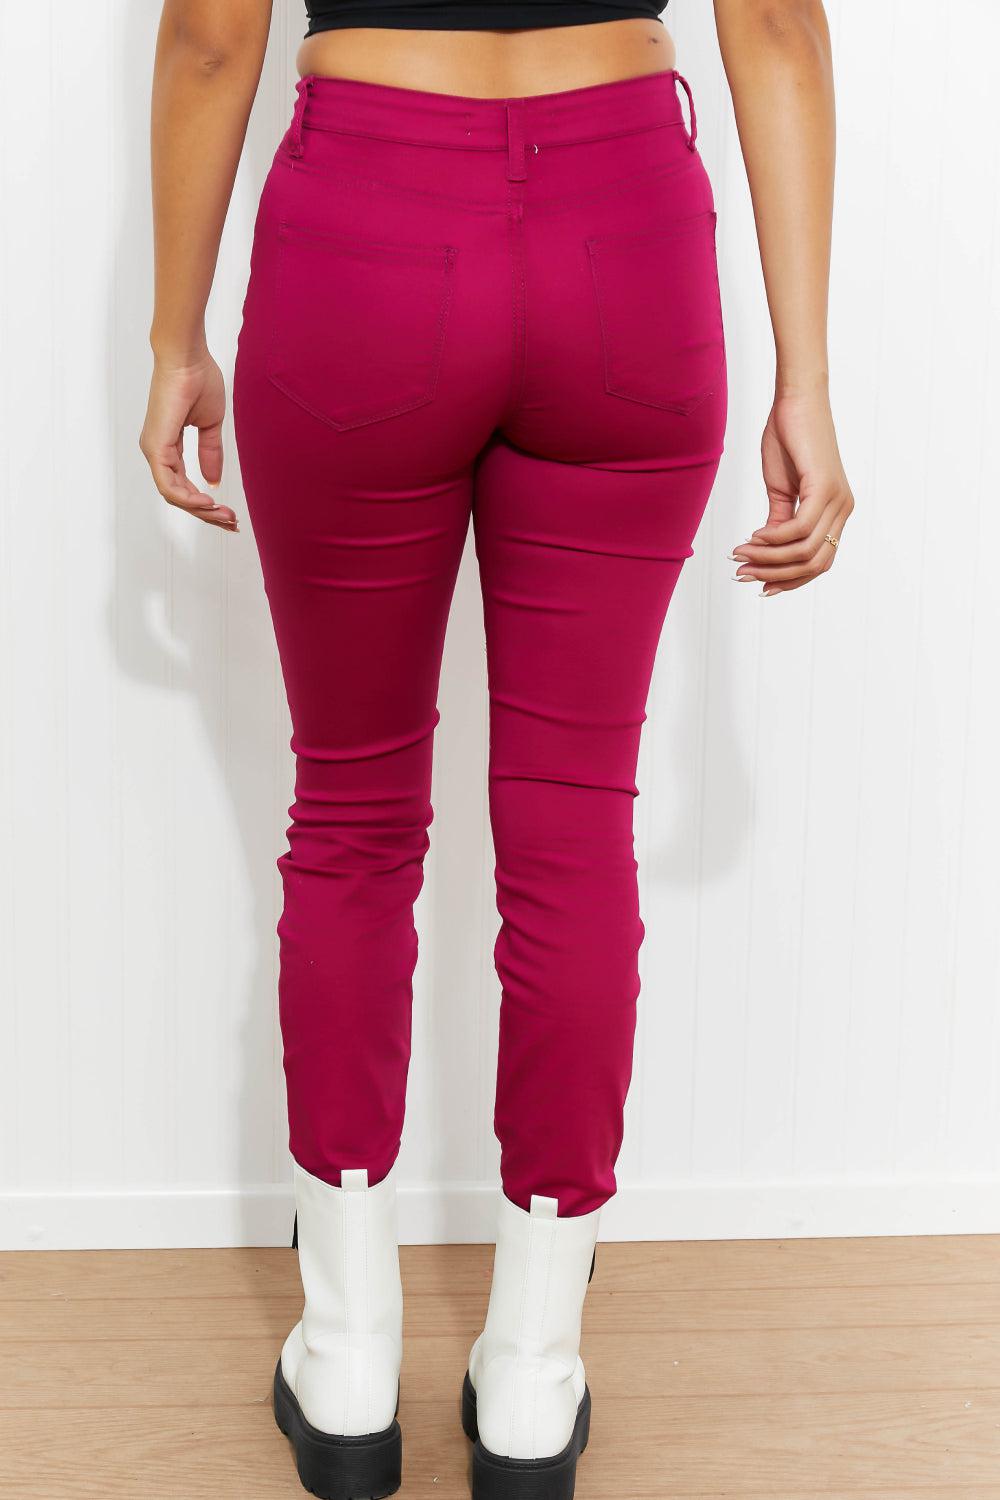 Zenana Walk the Line Full Size High Rise Skinny Jeans in Magenta